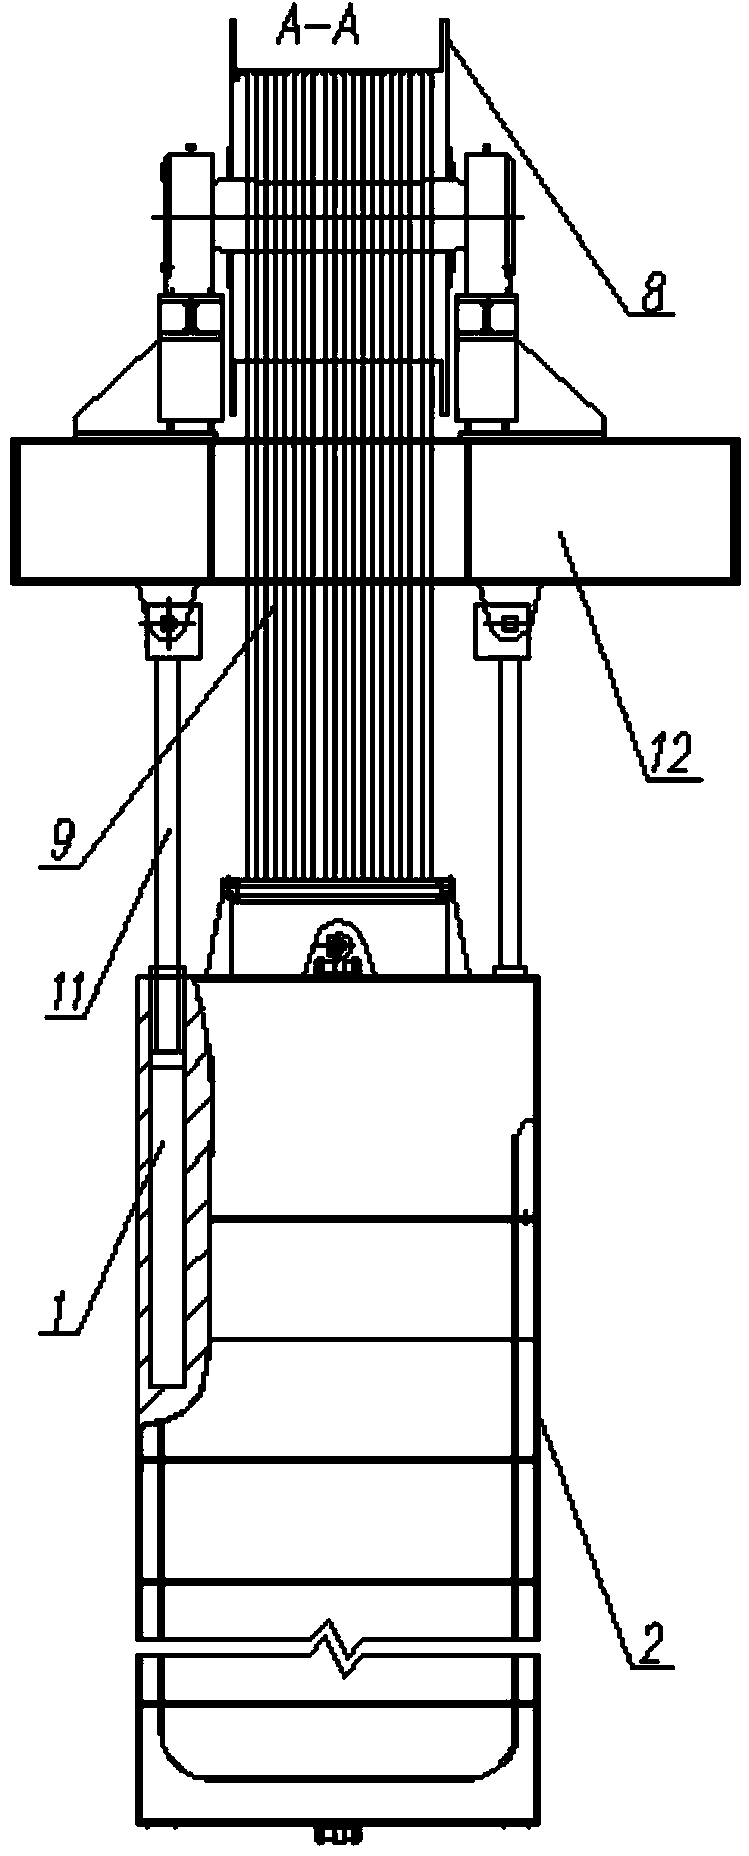 Lifting opening and closing mechanism of perpendicular lifting type opening bridge